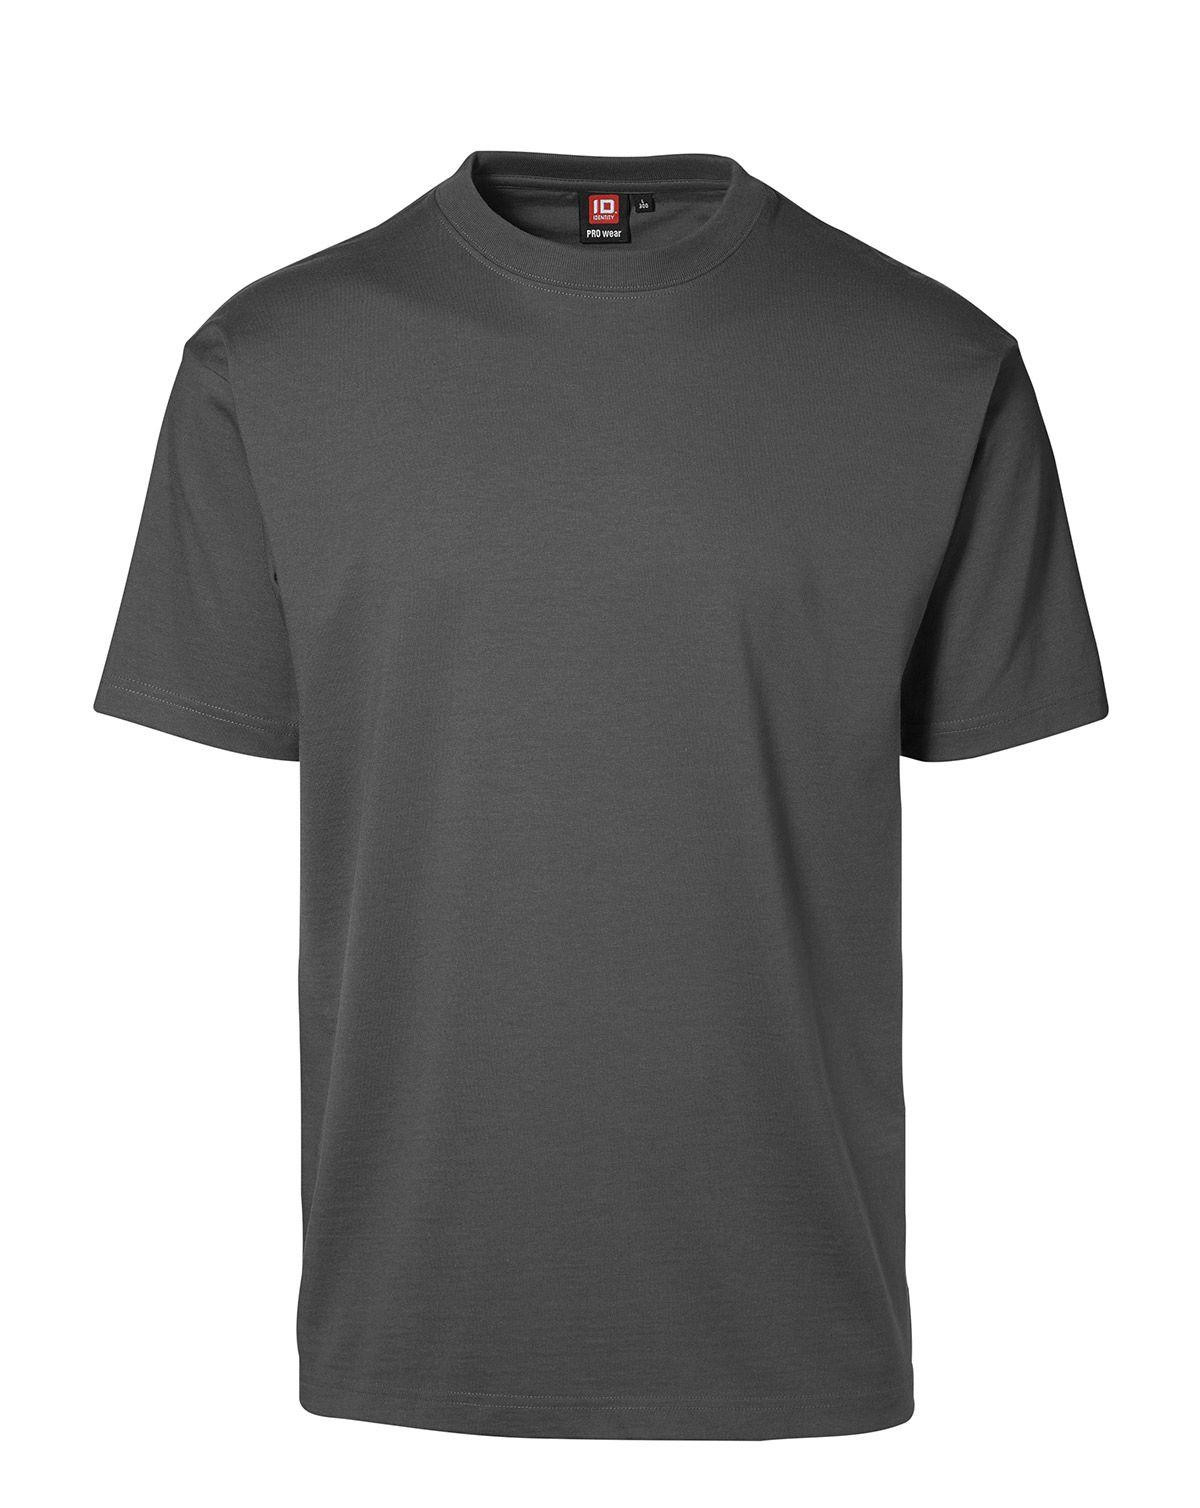 ID PRO Wear T-shirt til Herre (Sølv Grå, XL)